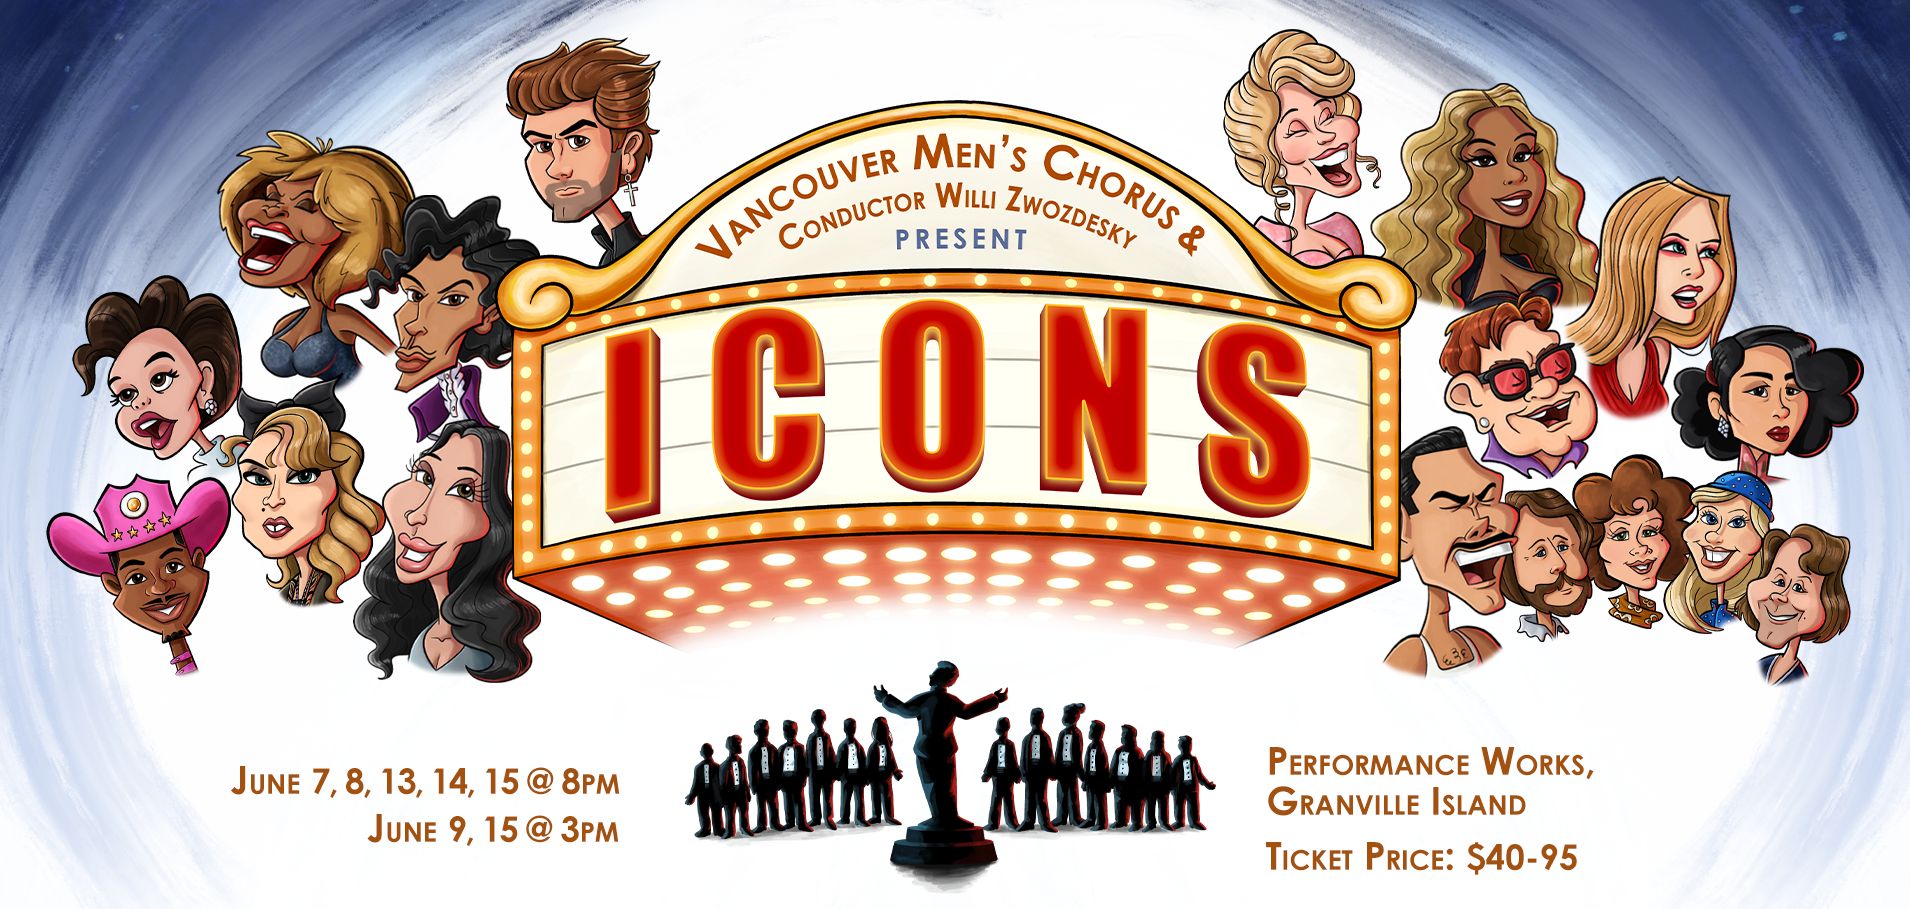 Vancouver Men's Chorus Presents: Icons!, Vancouver, British Columbia, Canada